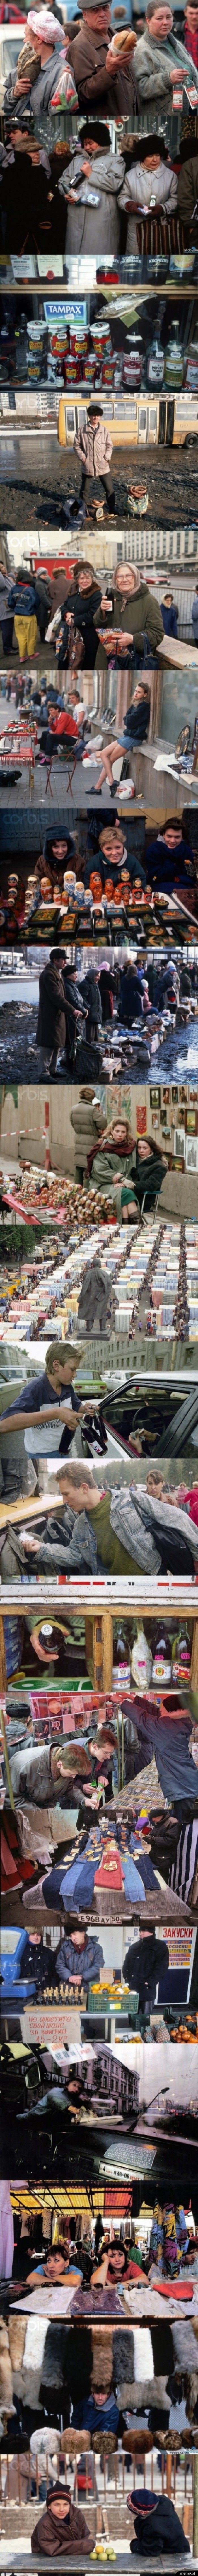 Rosja w latach '90